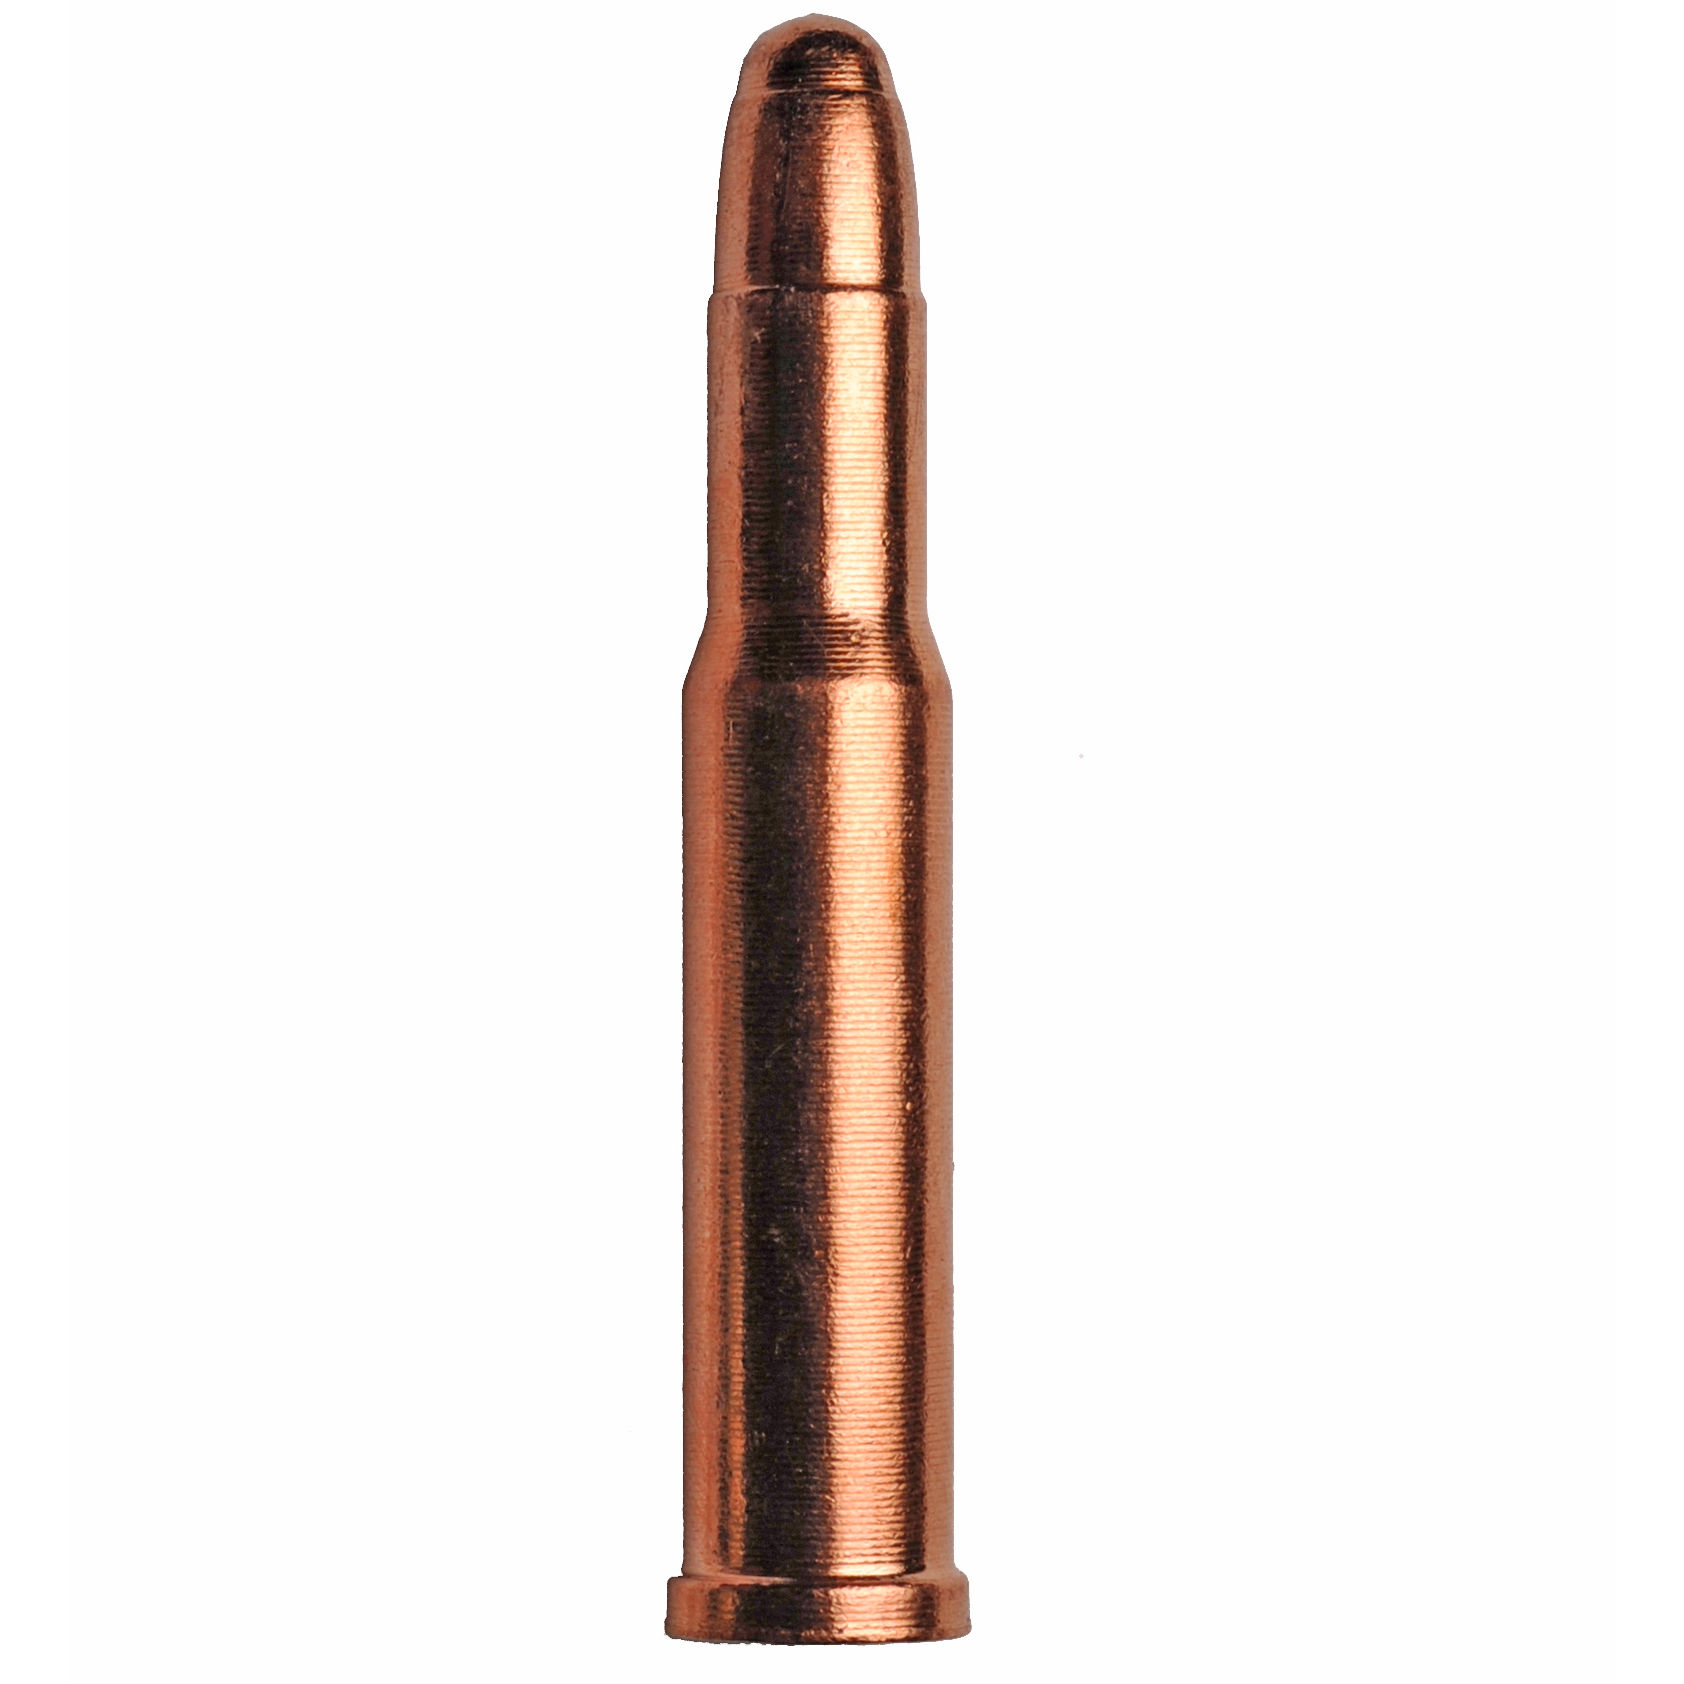 Buy 1.5 oz Copper Bullets (30-30, New) - Silver.com